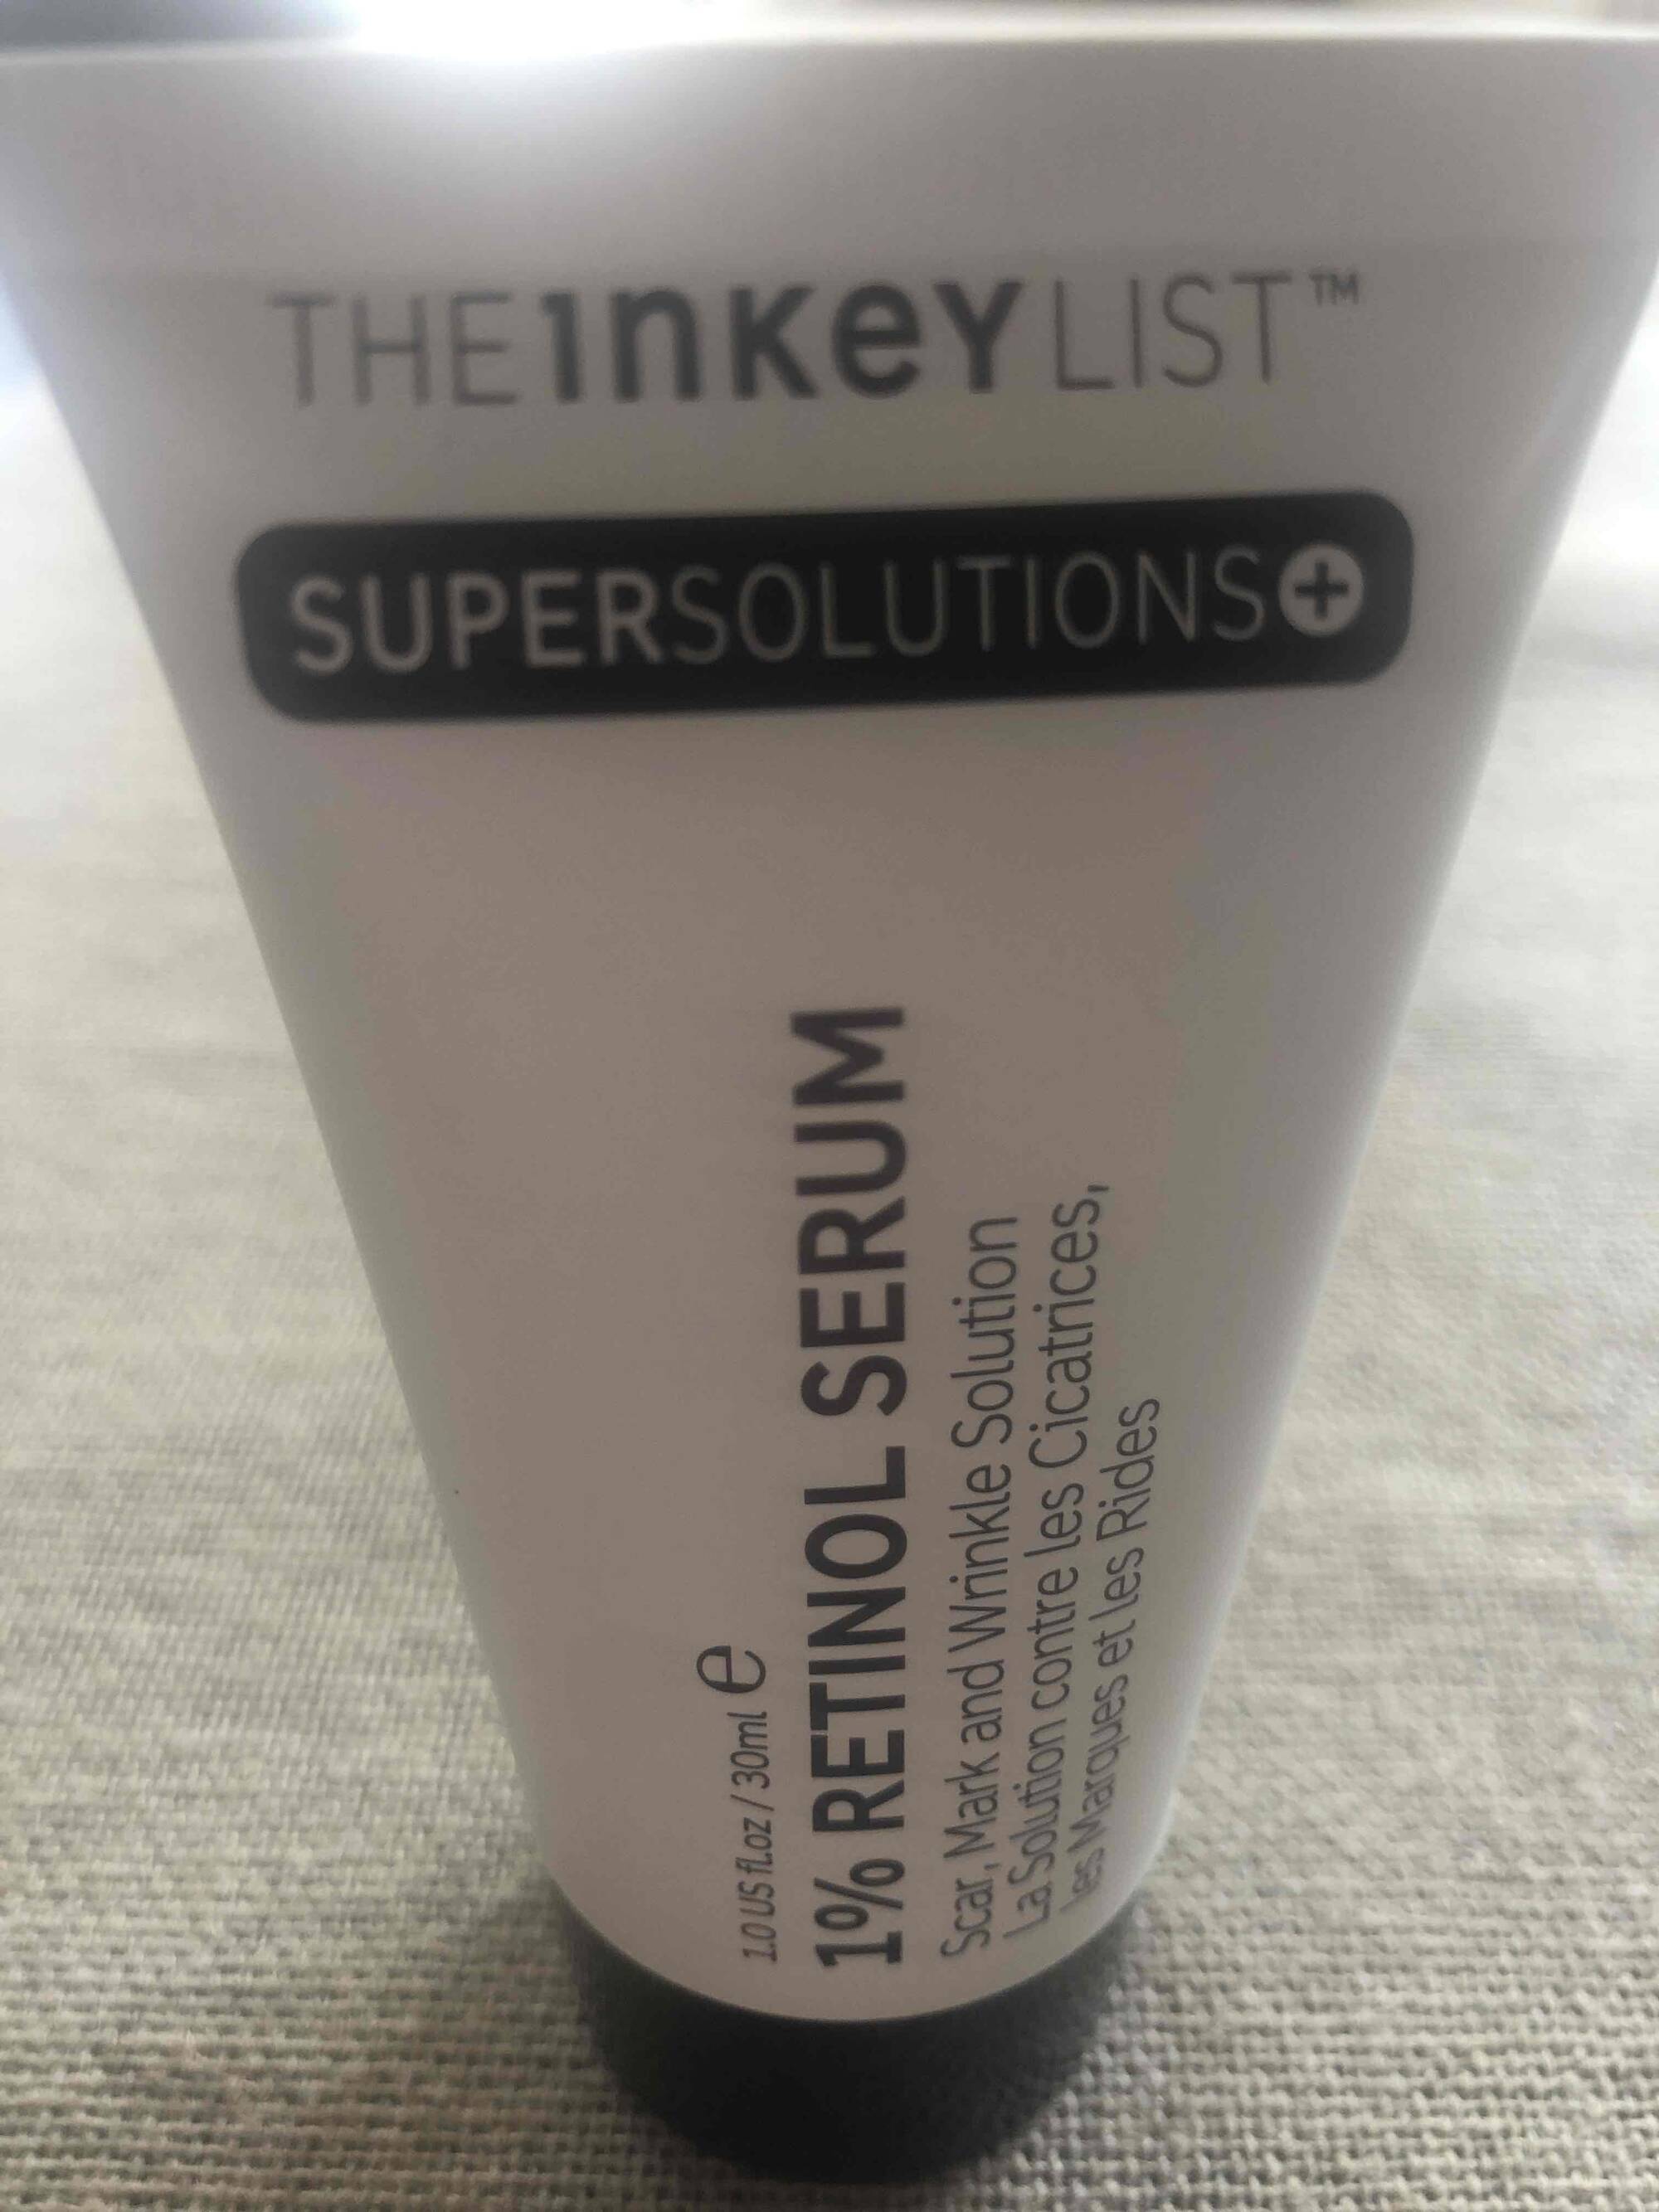 THE INKEY LIST - Supersolutions - 1% retinol serum